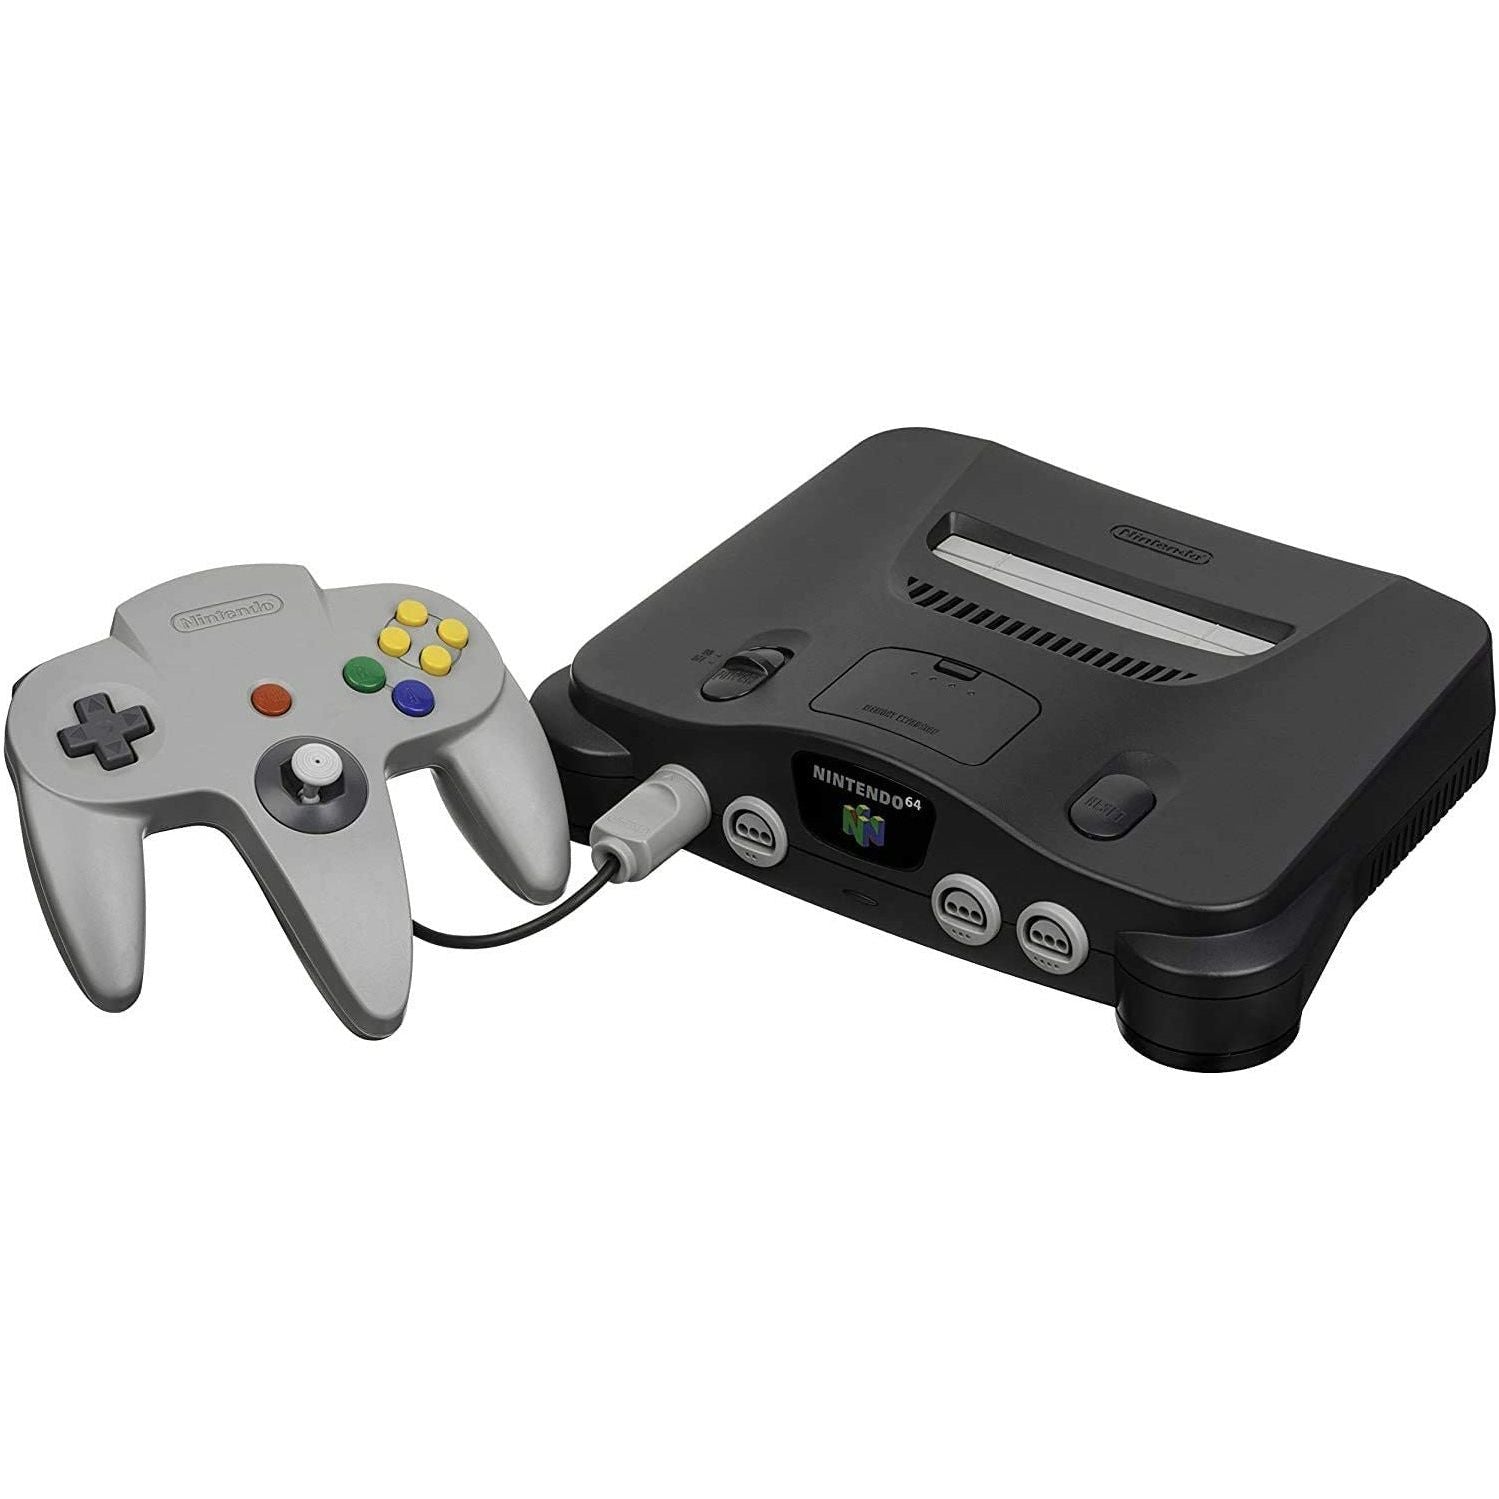 Nintendo 64 System - Grey (Minor Cosmetic DMG)